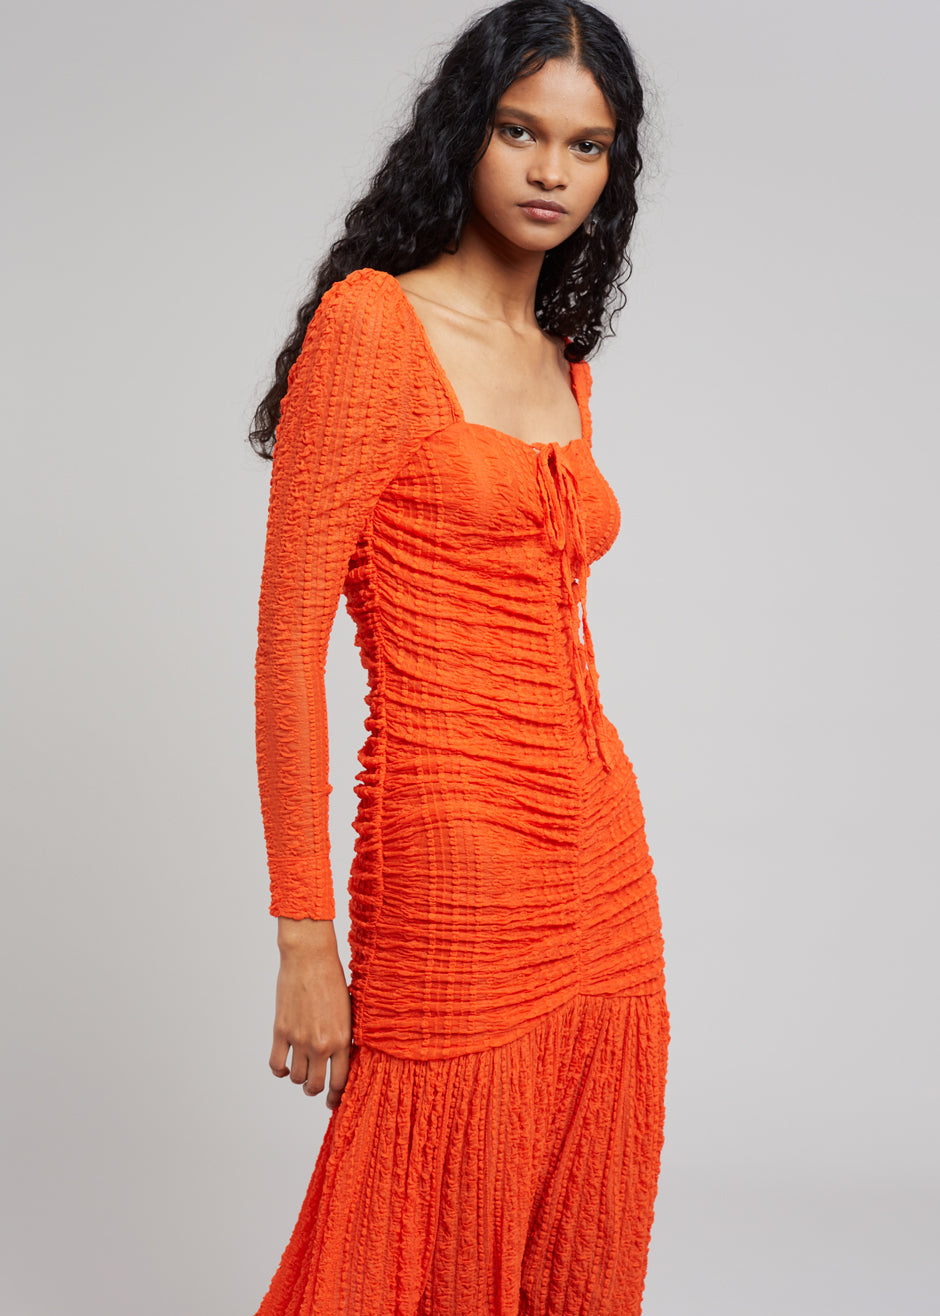 GANNI Ruched Lace Midi Dress - Orangedotcom - 4